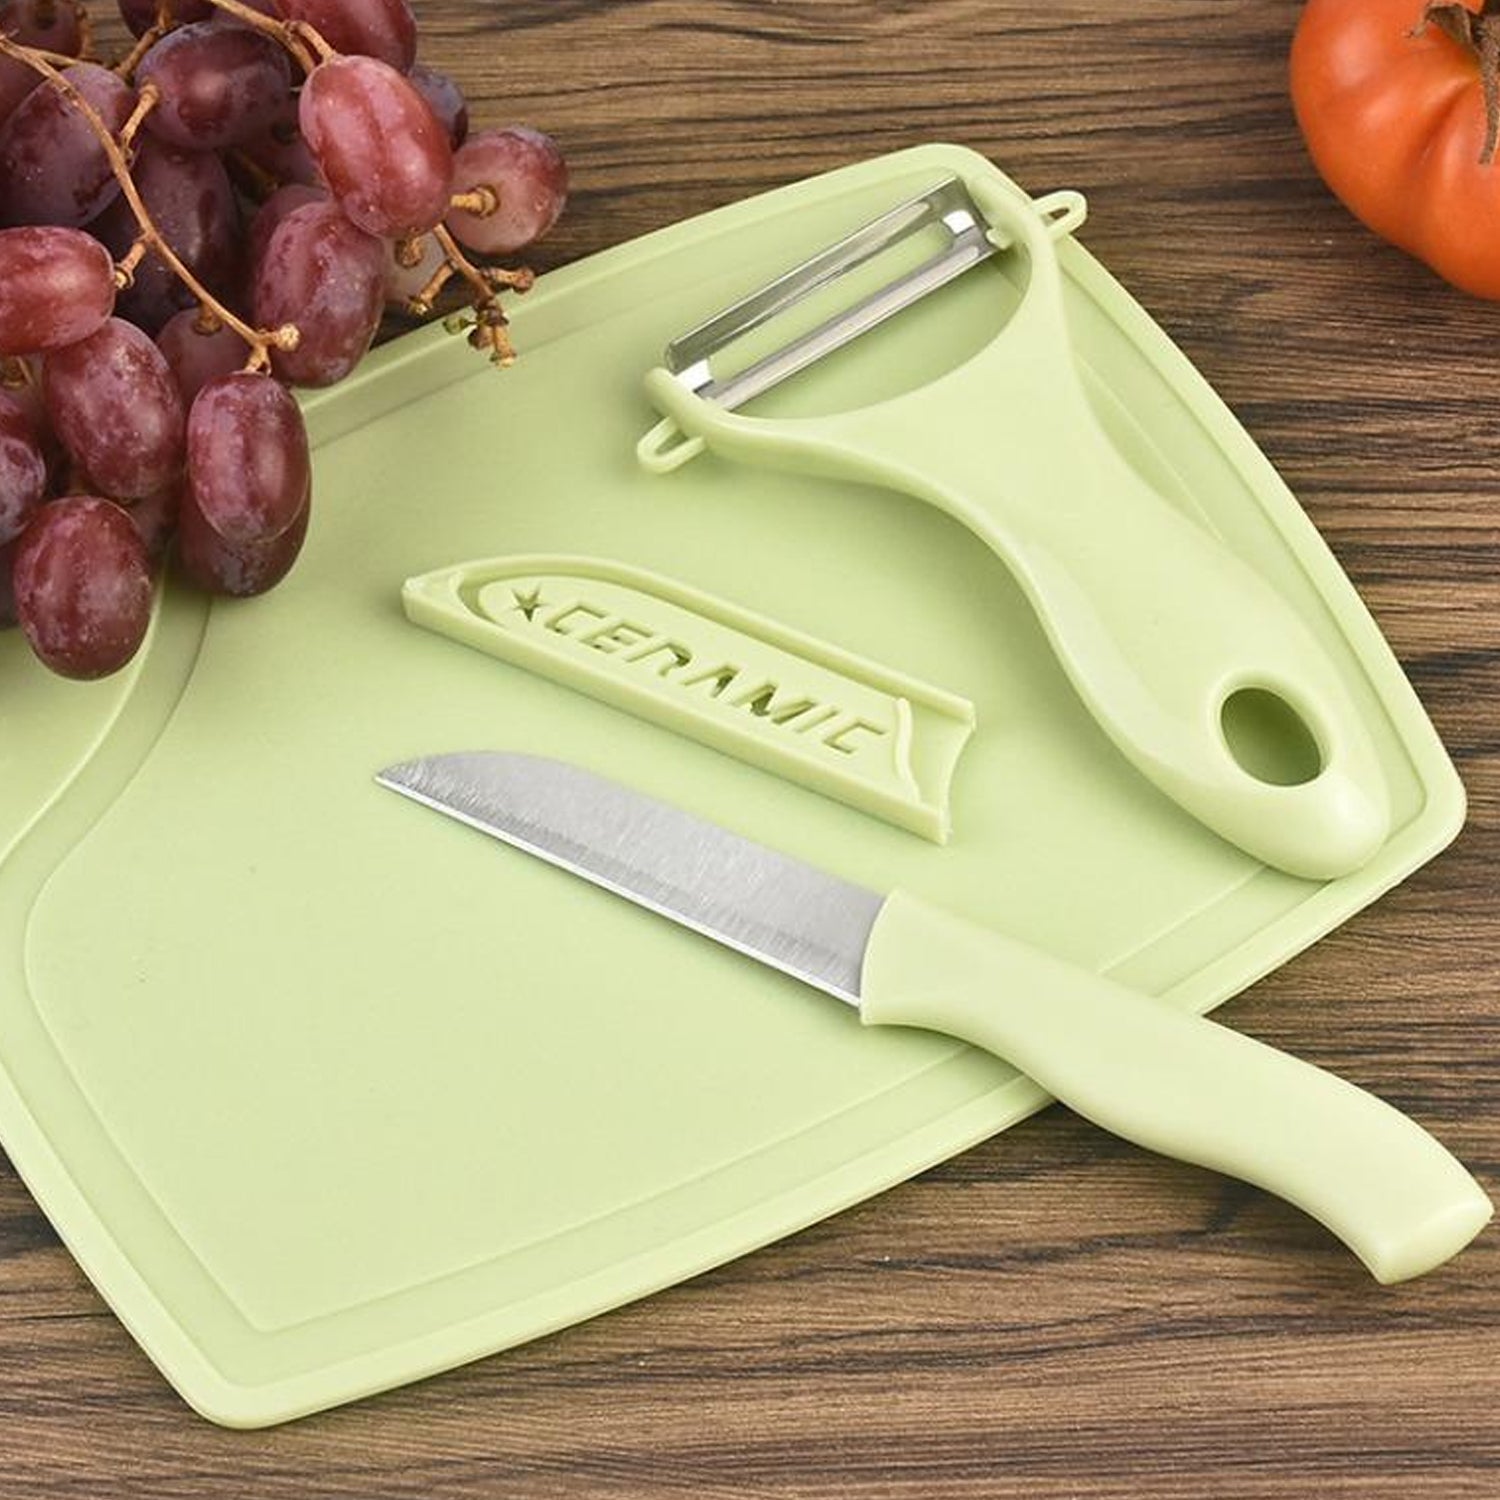 5207 Plastic Kitchen Peeler - Green & Classic Stainless Steel 3-Piece Knife Set Combo DeoDap